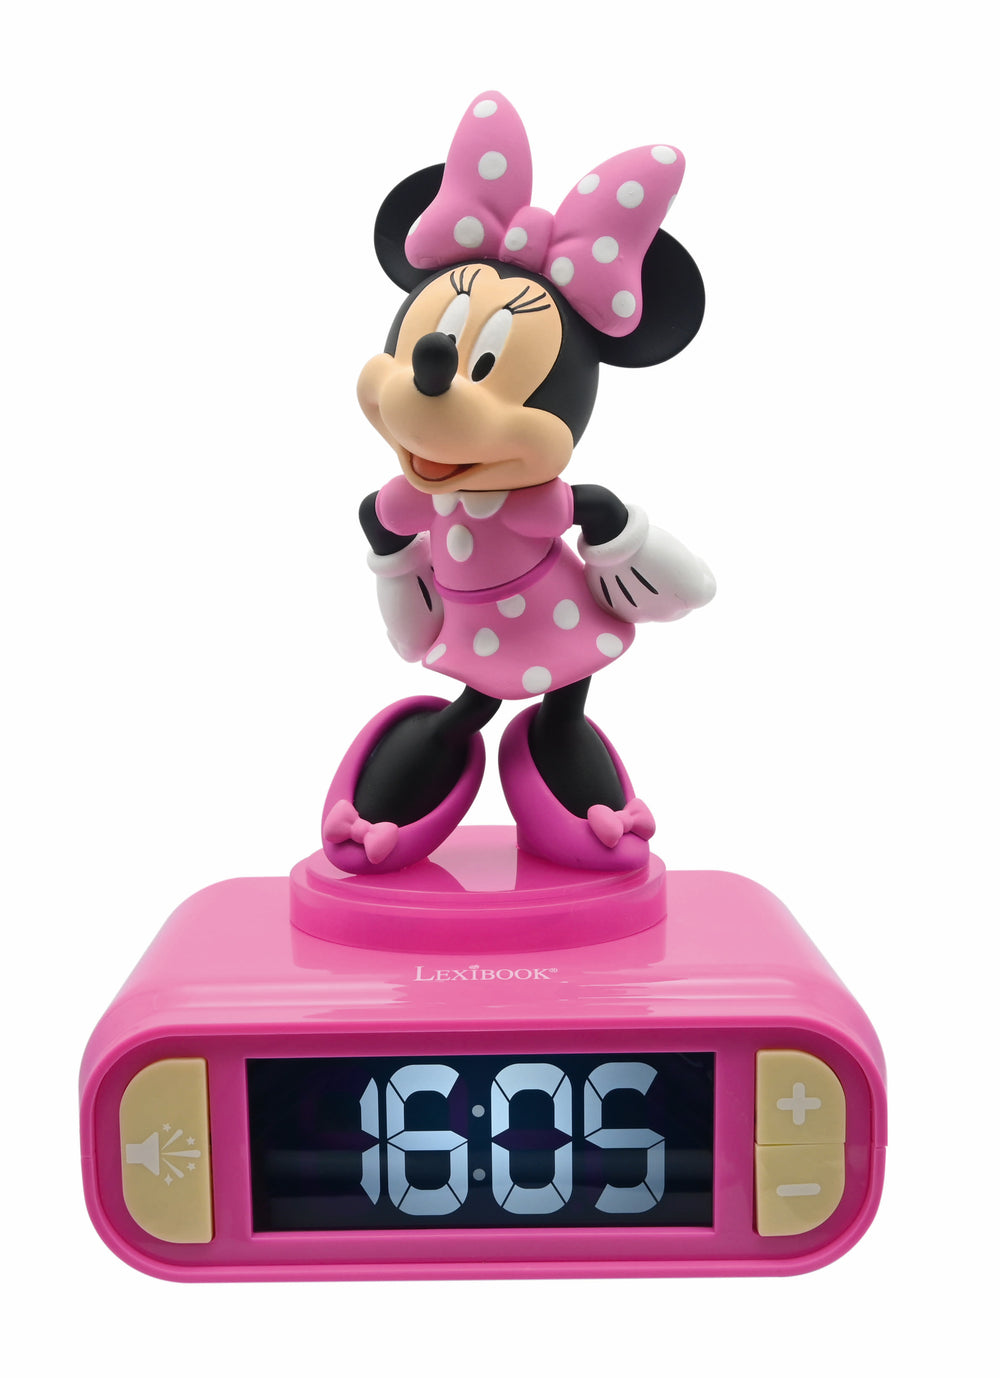 Disney Minnie Mouse Digital Alarm Clock with Nightlight - Pink